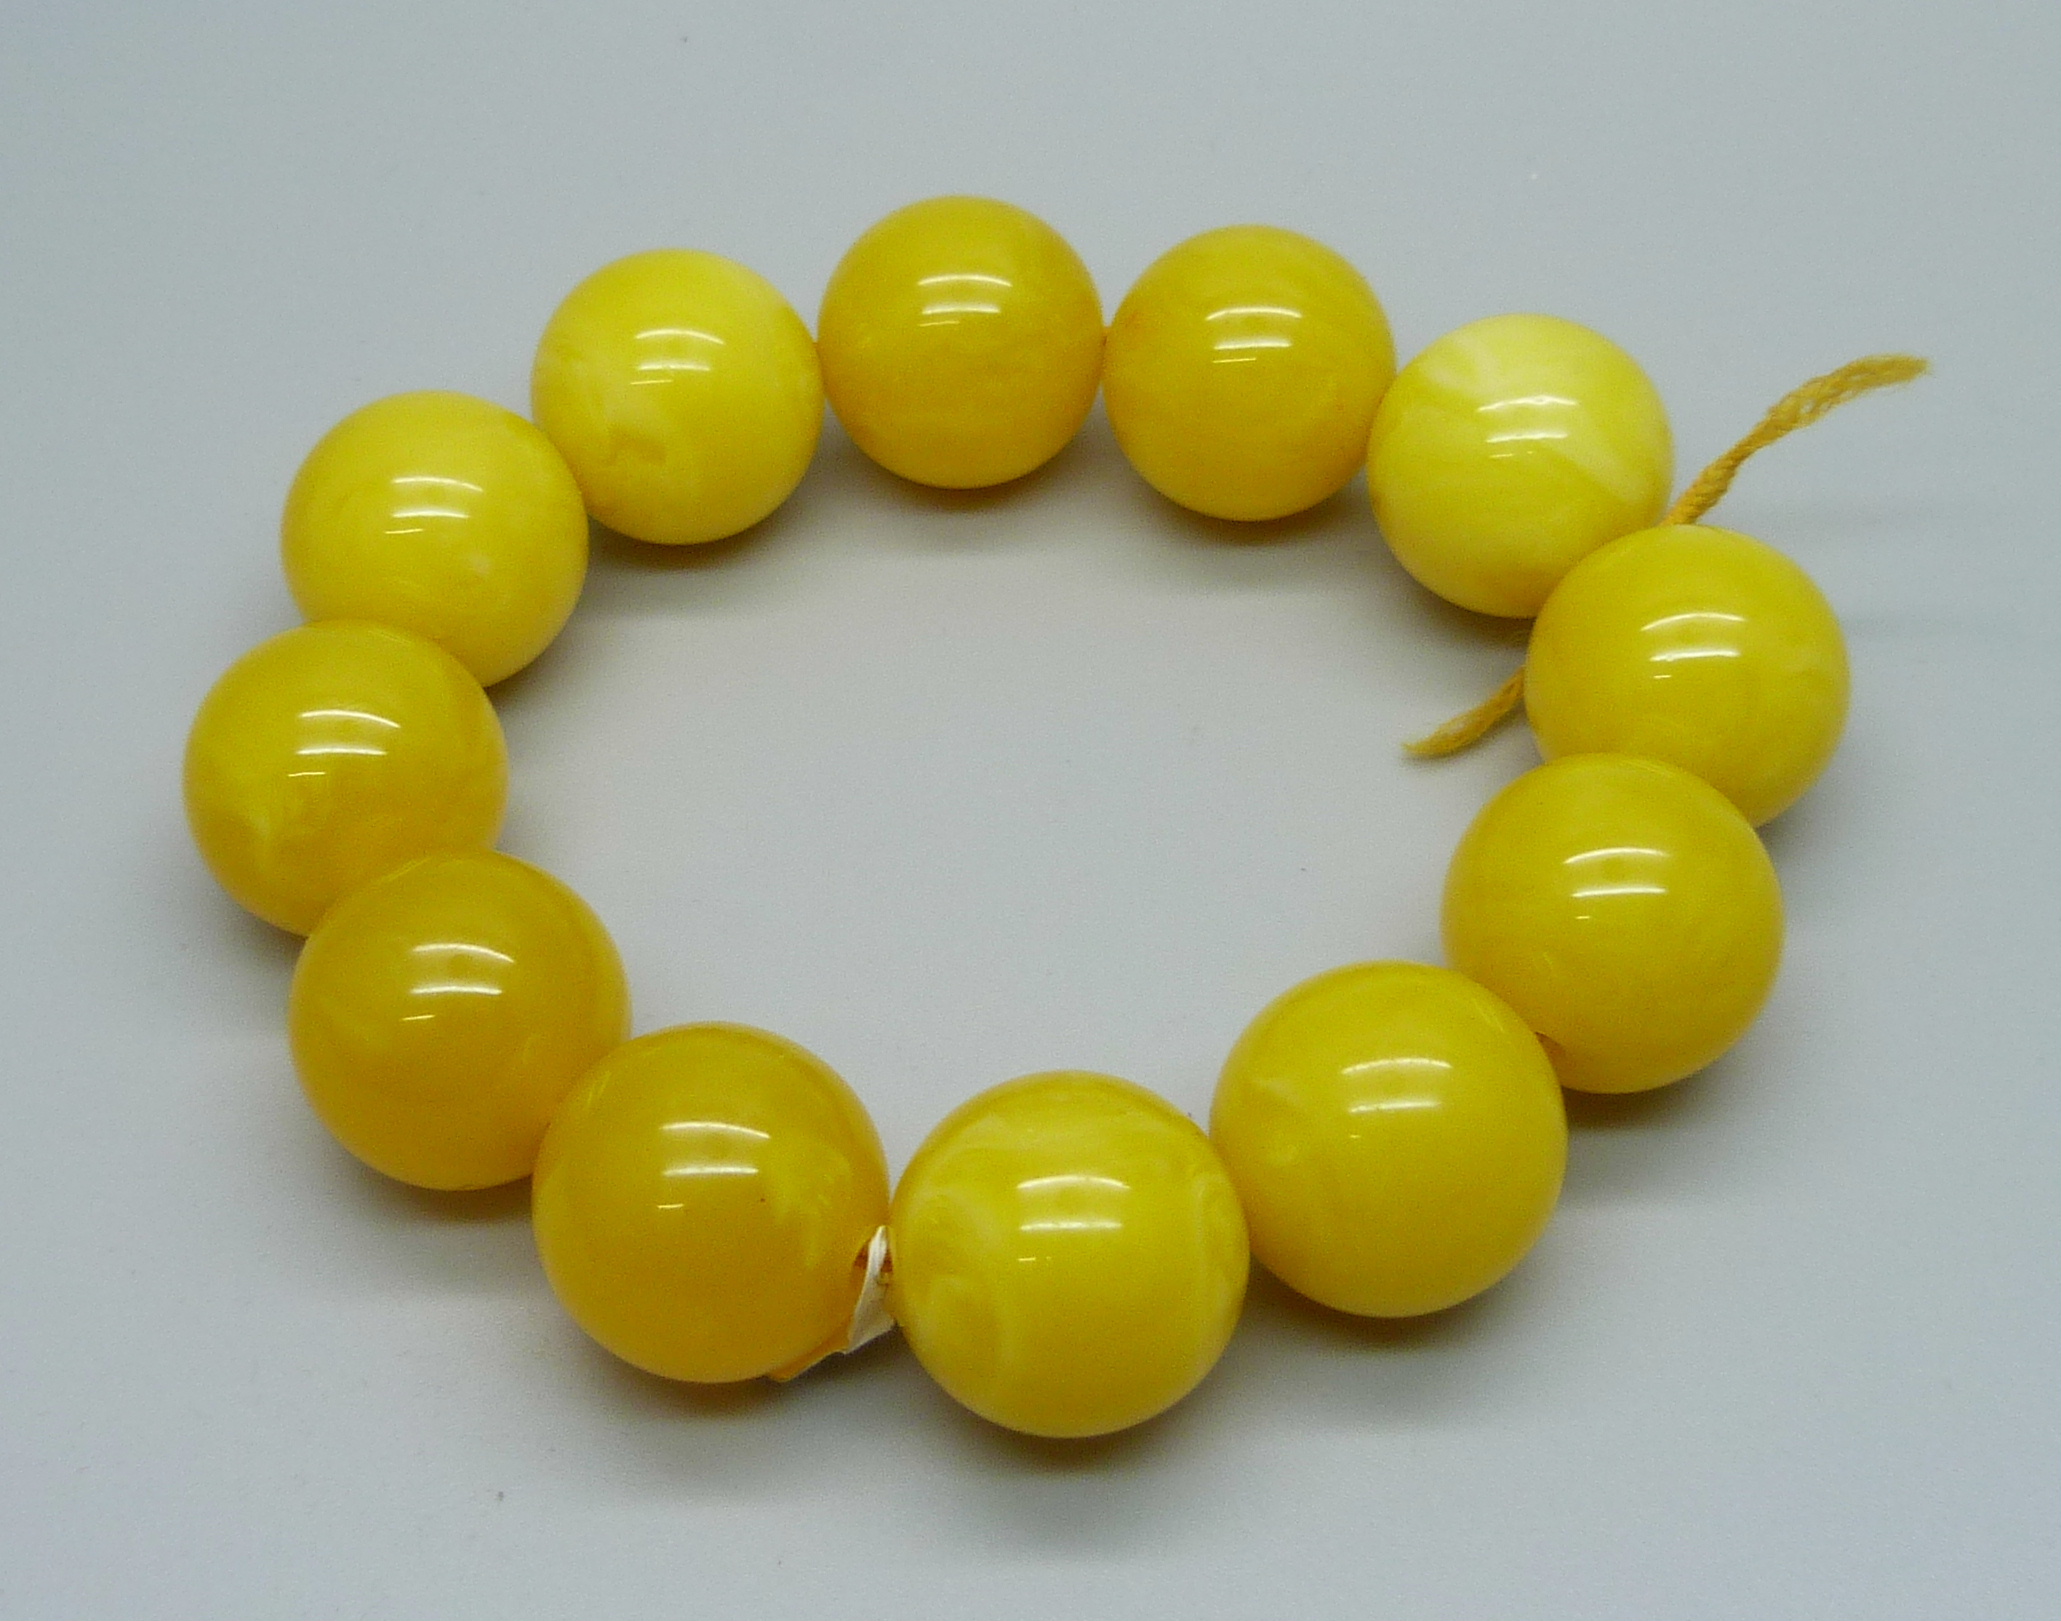 A Bakelite bead bracelet in yellow